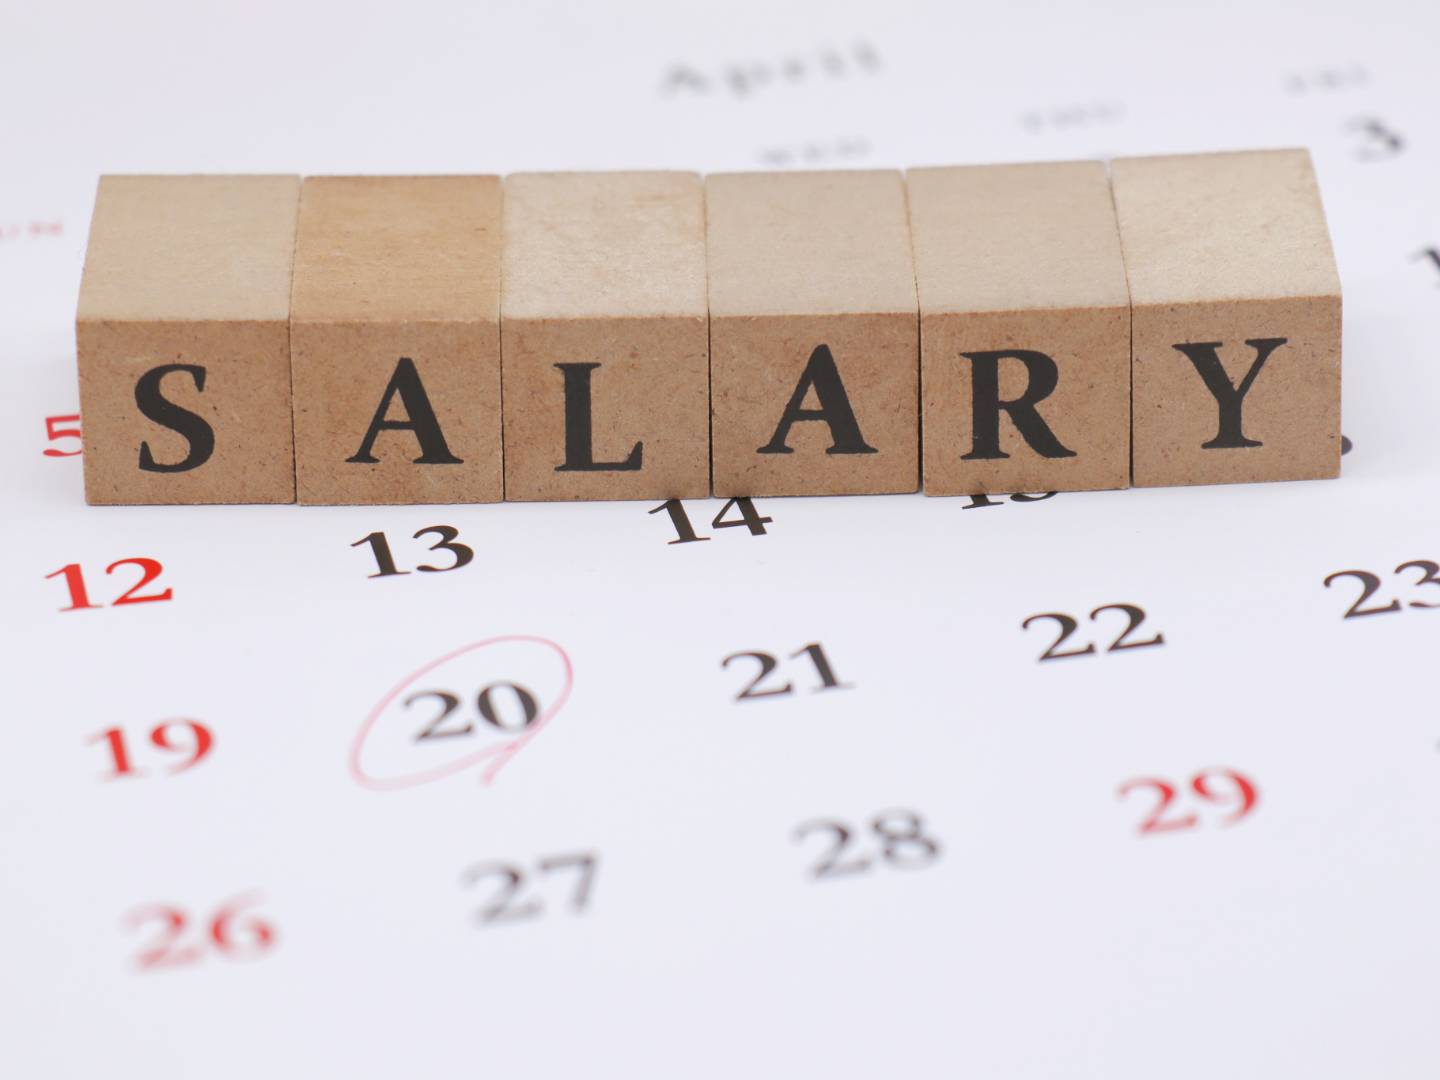 salary image on calendar